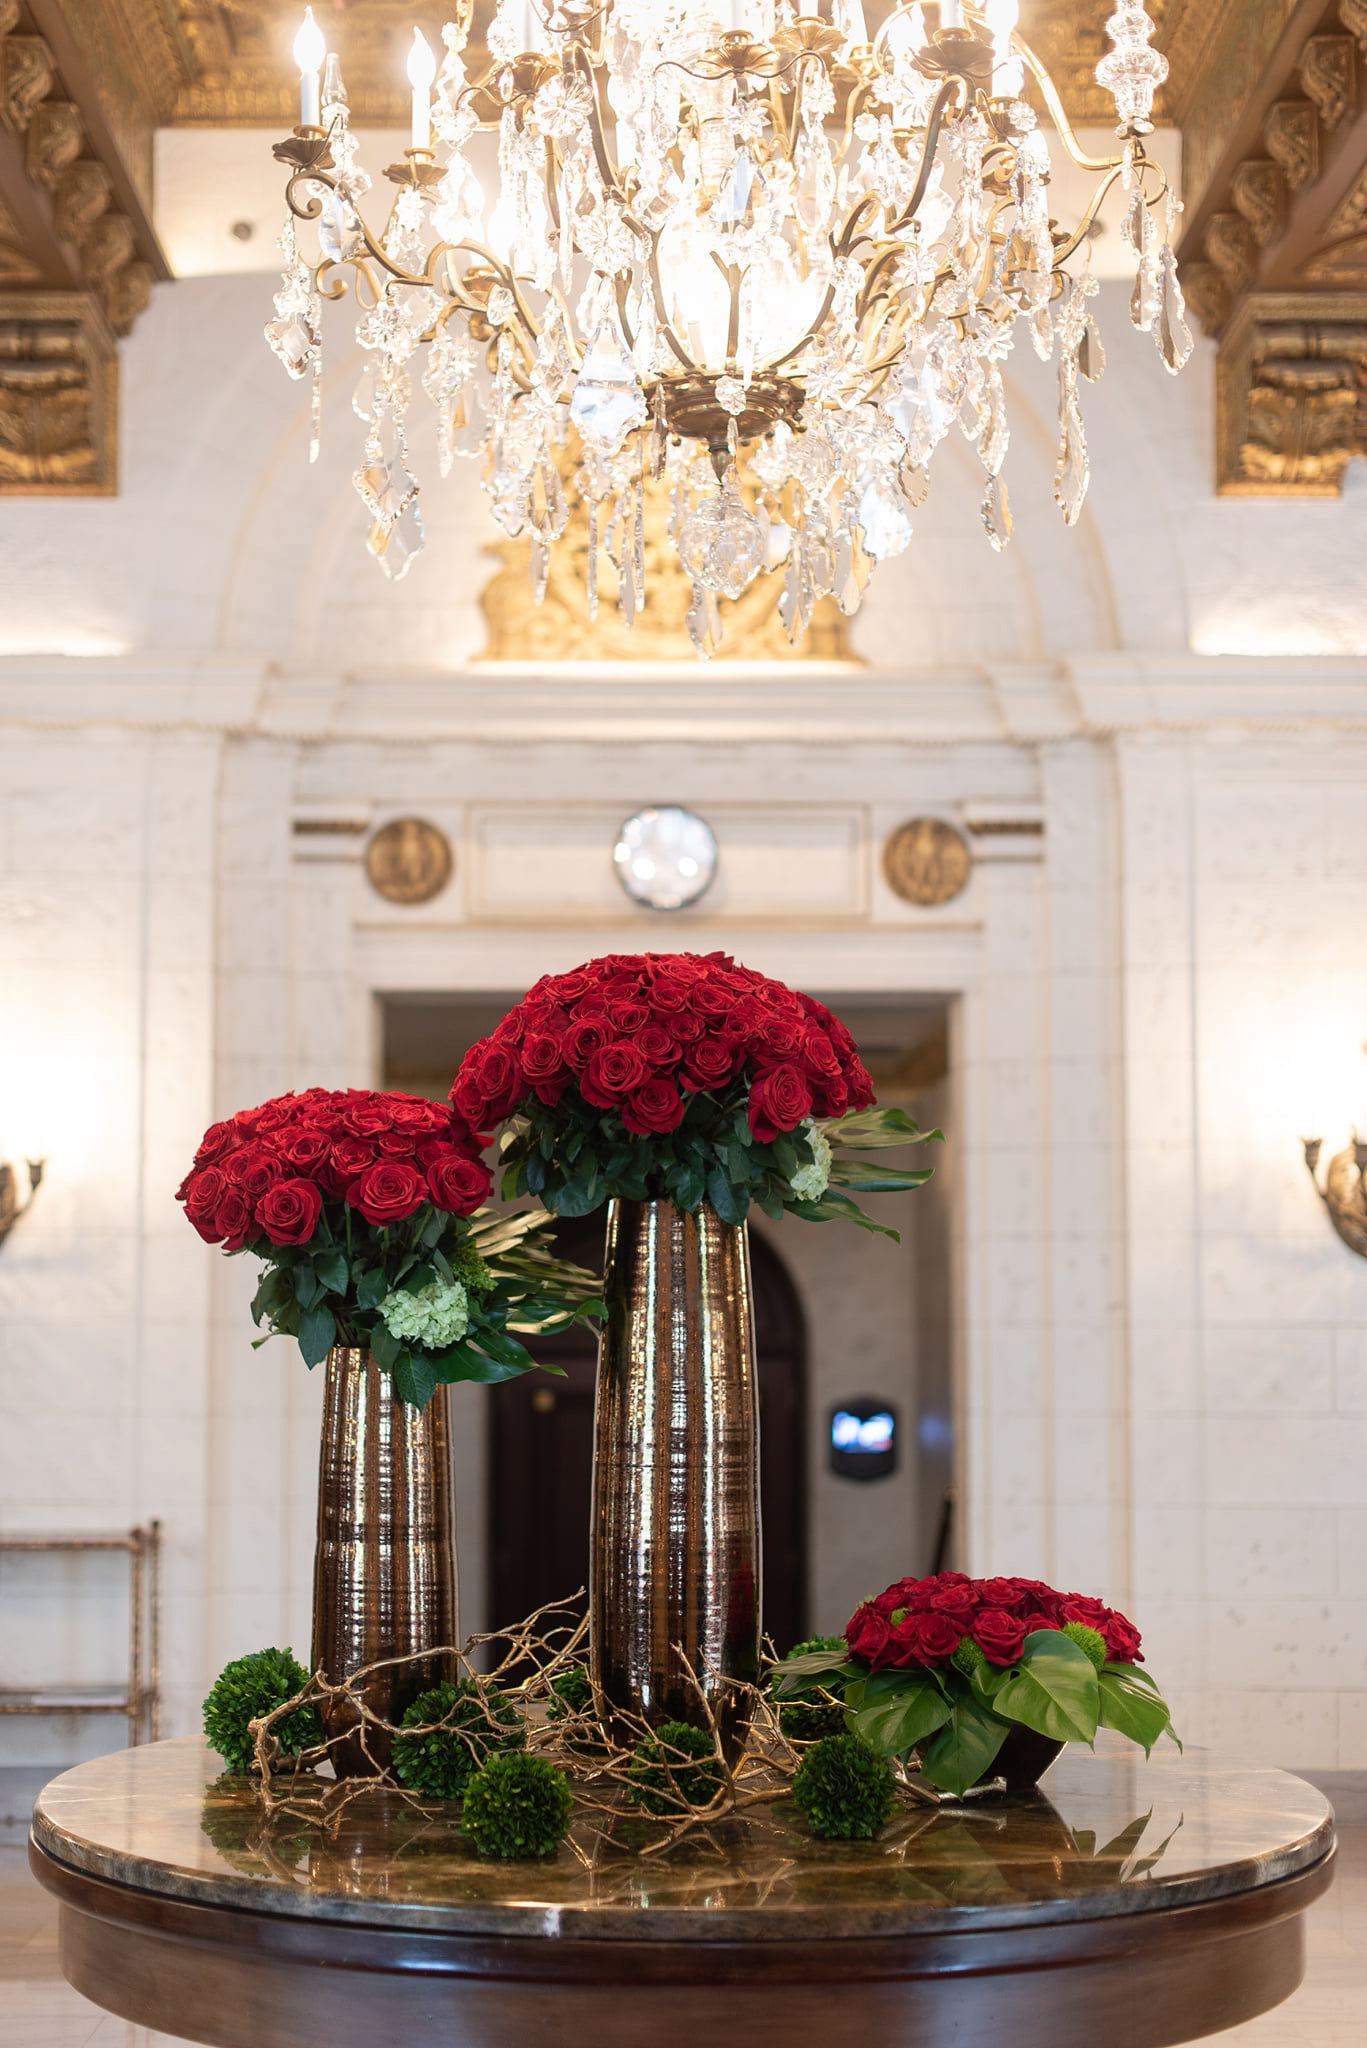 The St. Regis Washington D.C. Hotel - Washington, DC, USA - Lobby